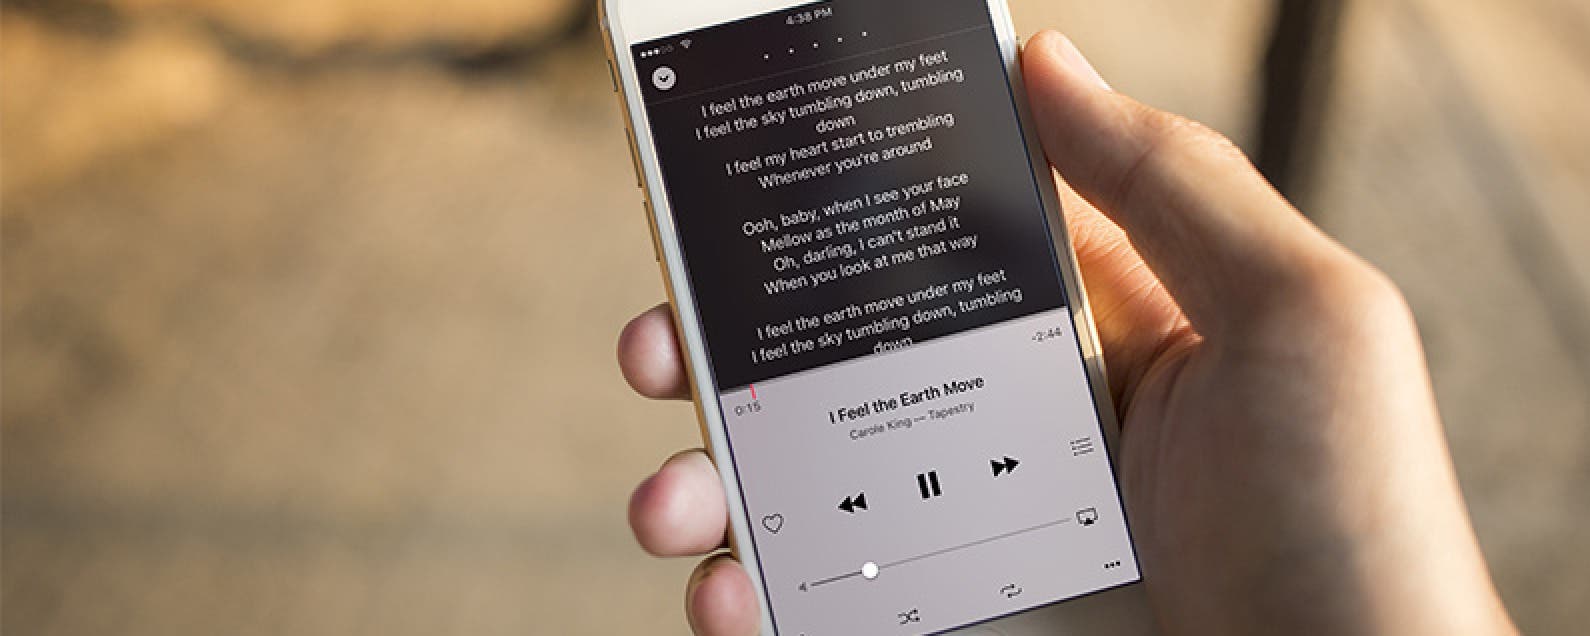 spotify lyrics iphone